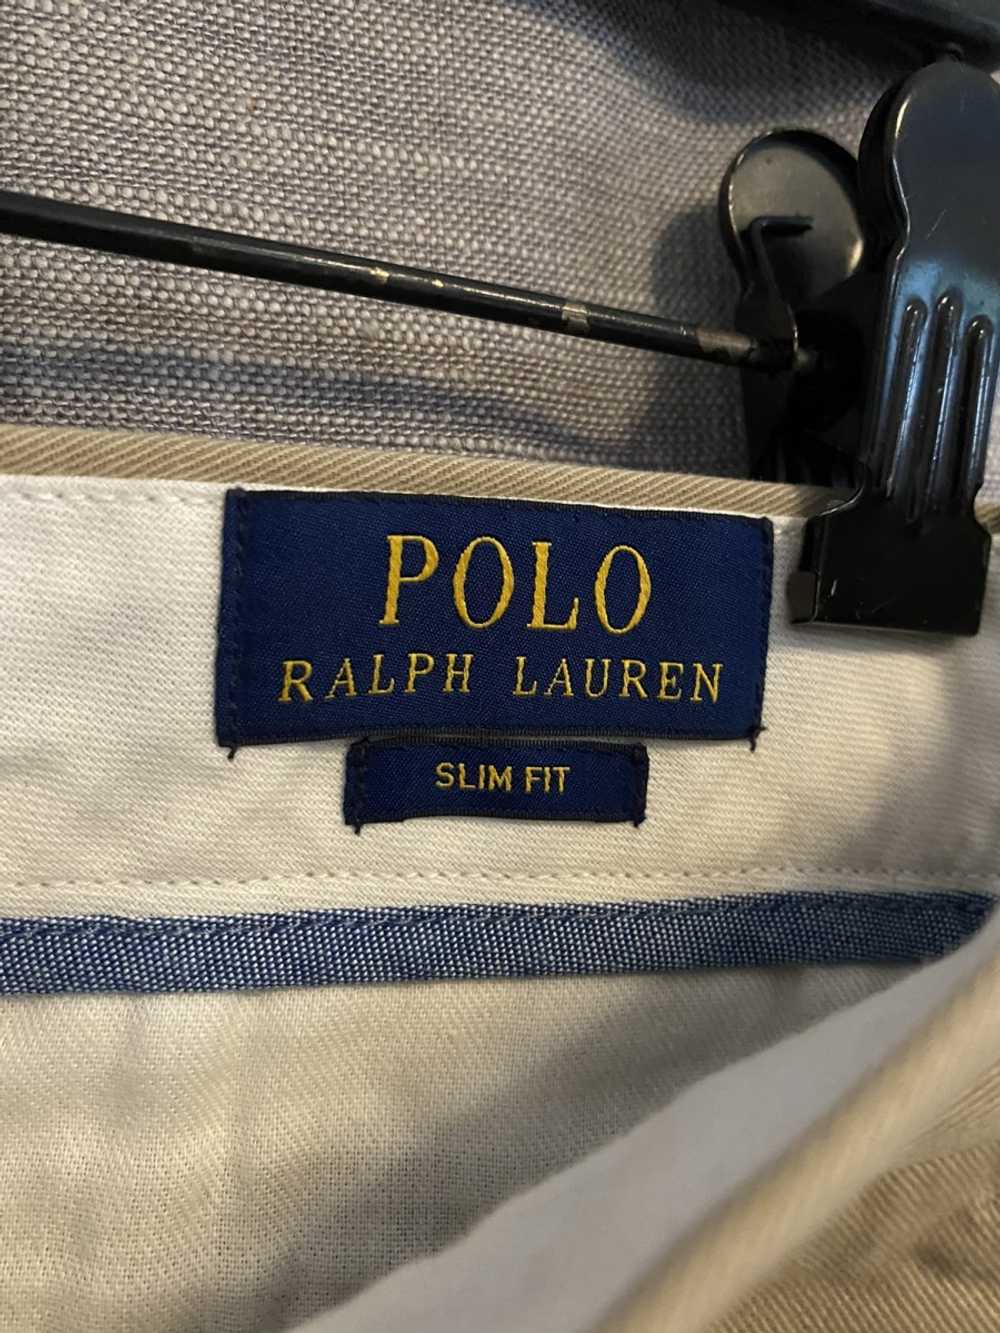 Polo Ralph Lauren - Skull Patterned Pants 32x32 - image 4